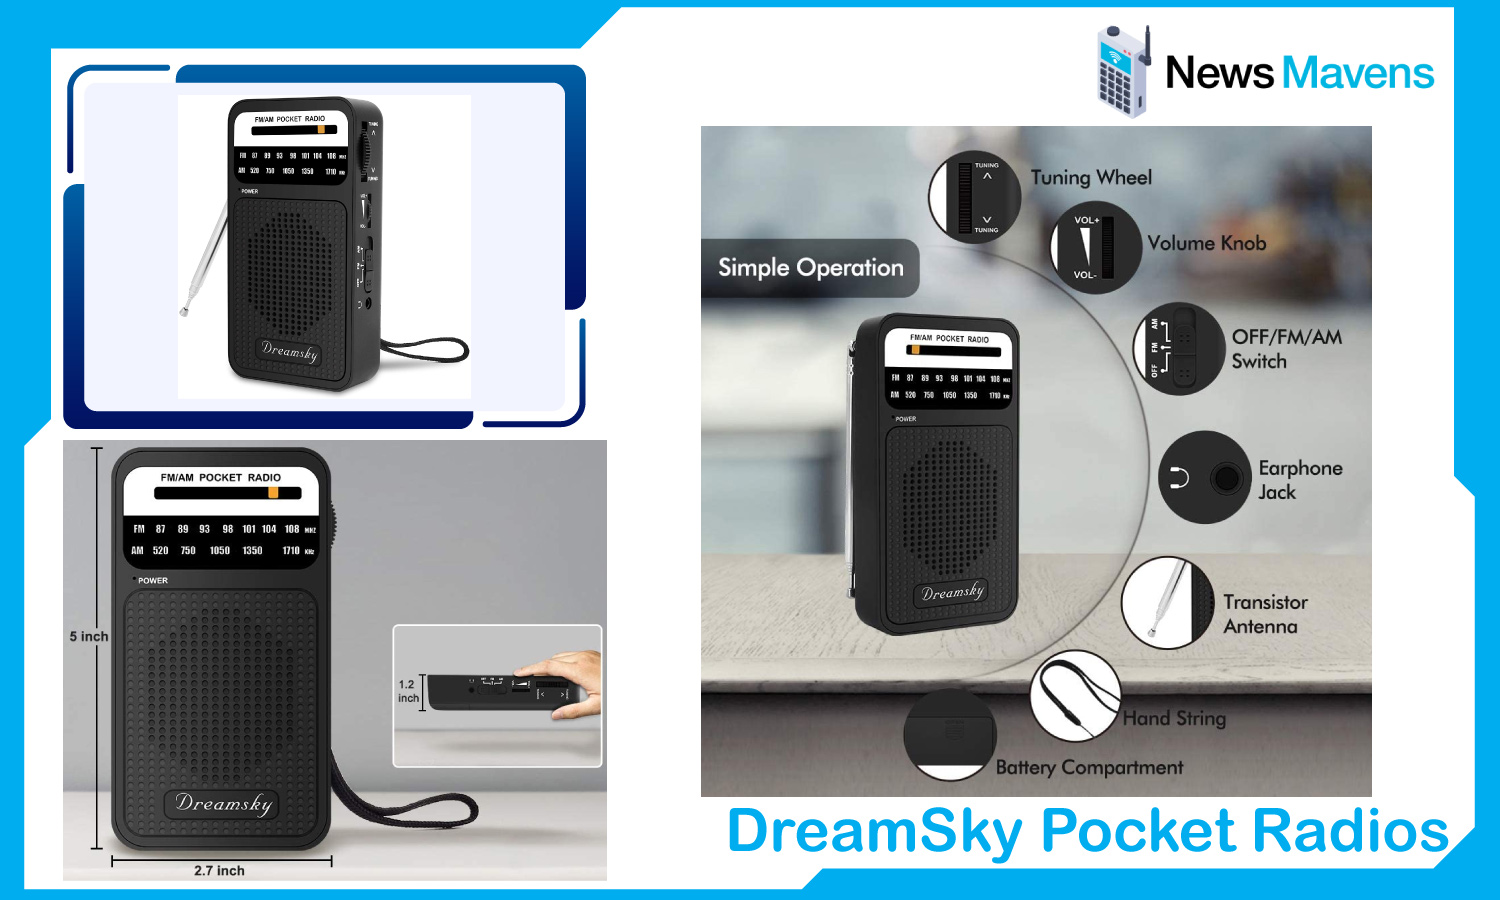 DreamSky Pocket Radios